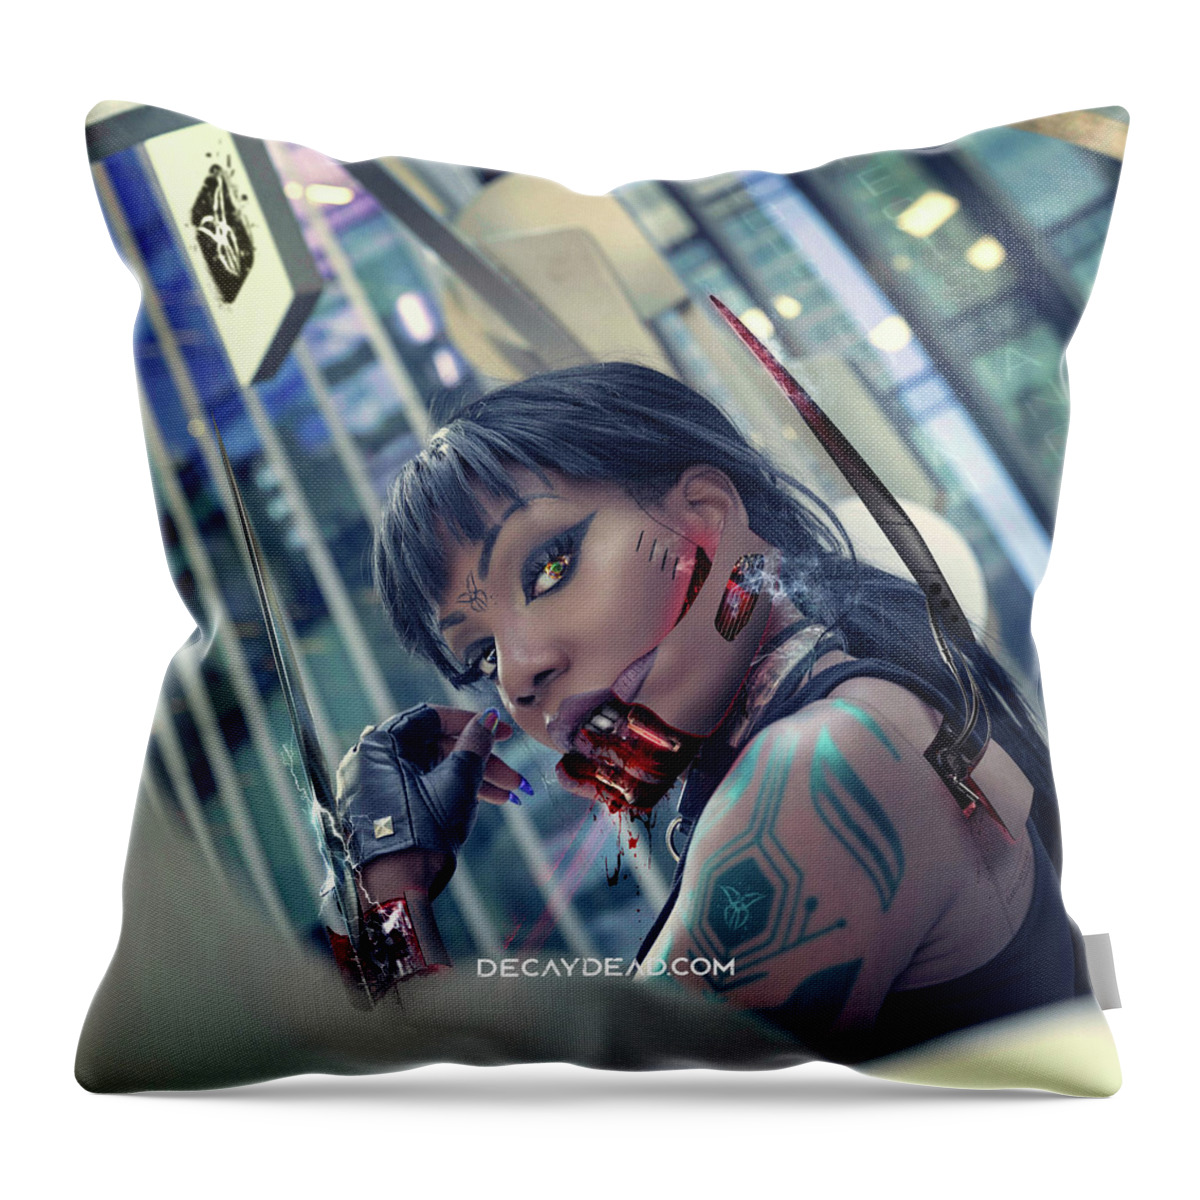 Argus Dorian Throw Pillow featuring the digital art Nyx-x by Argus Dorian